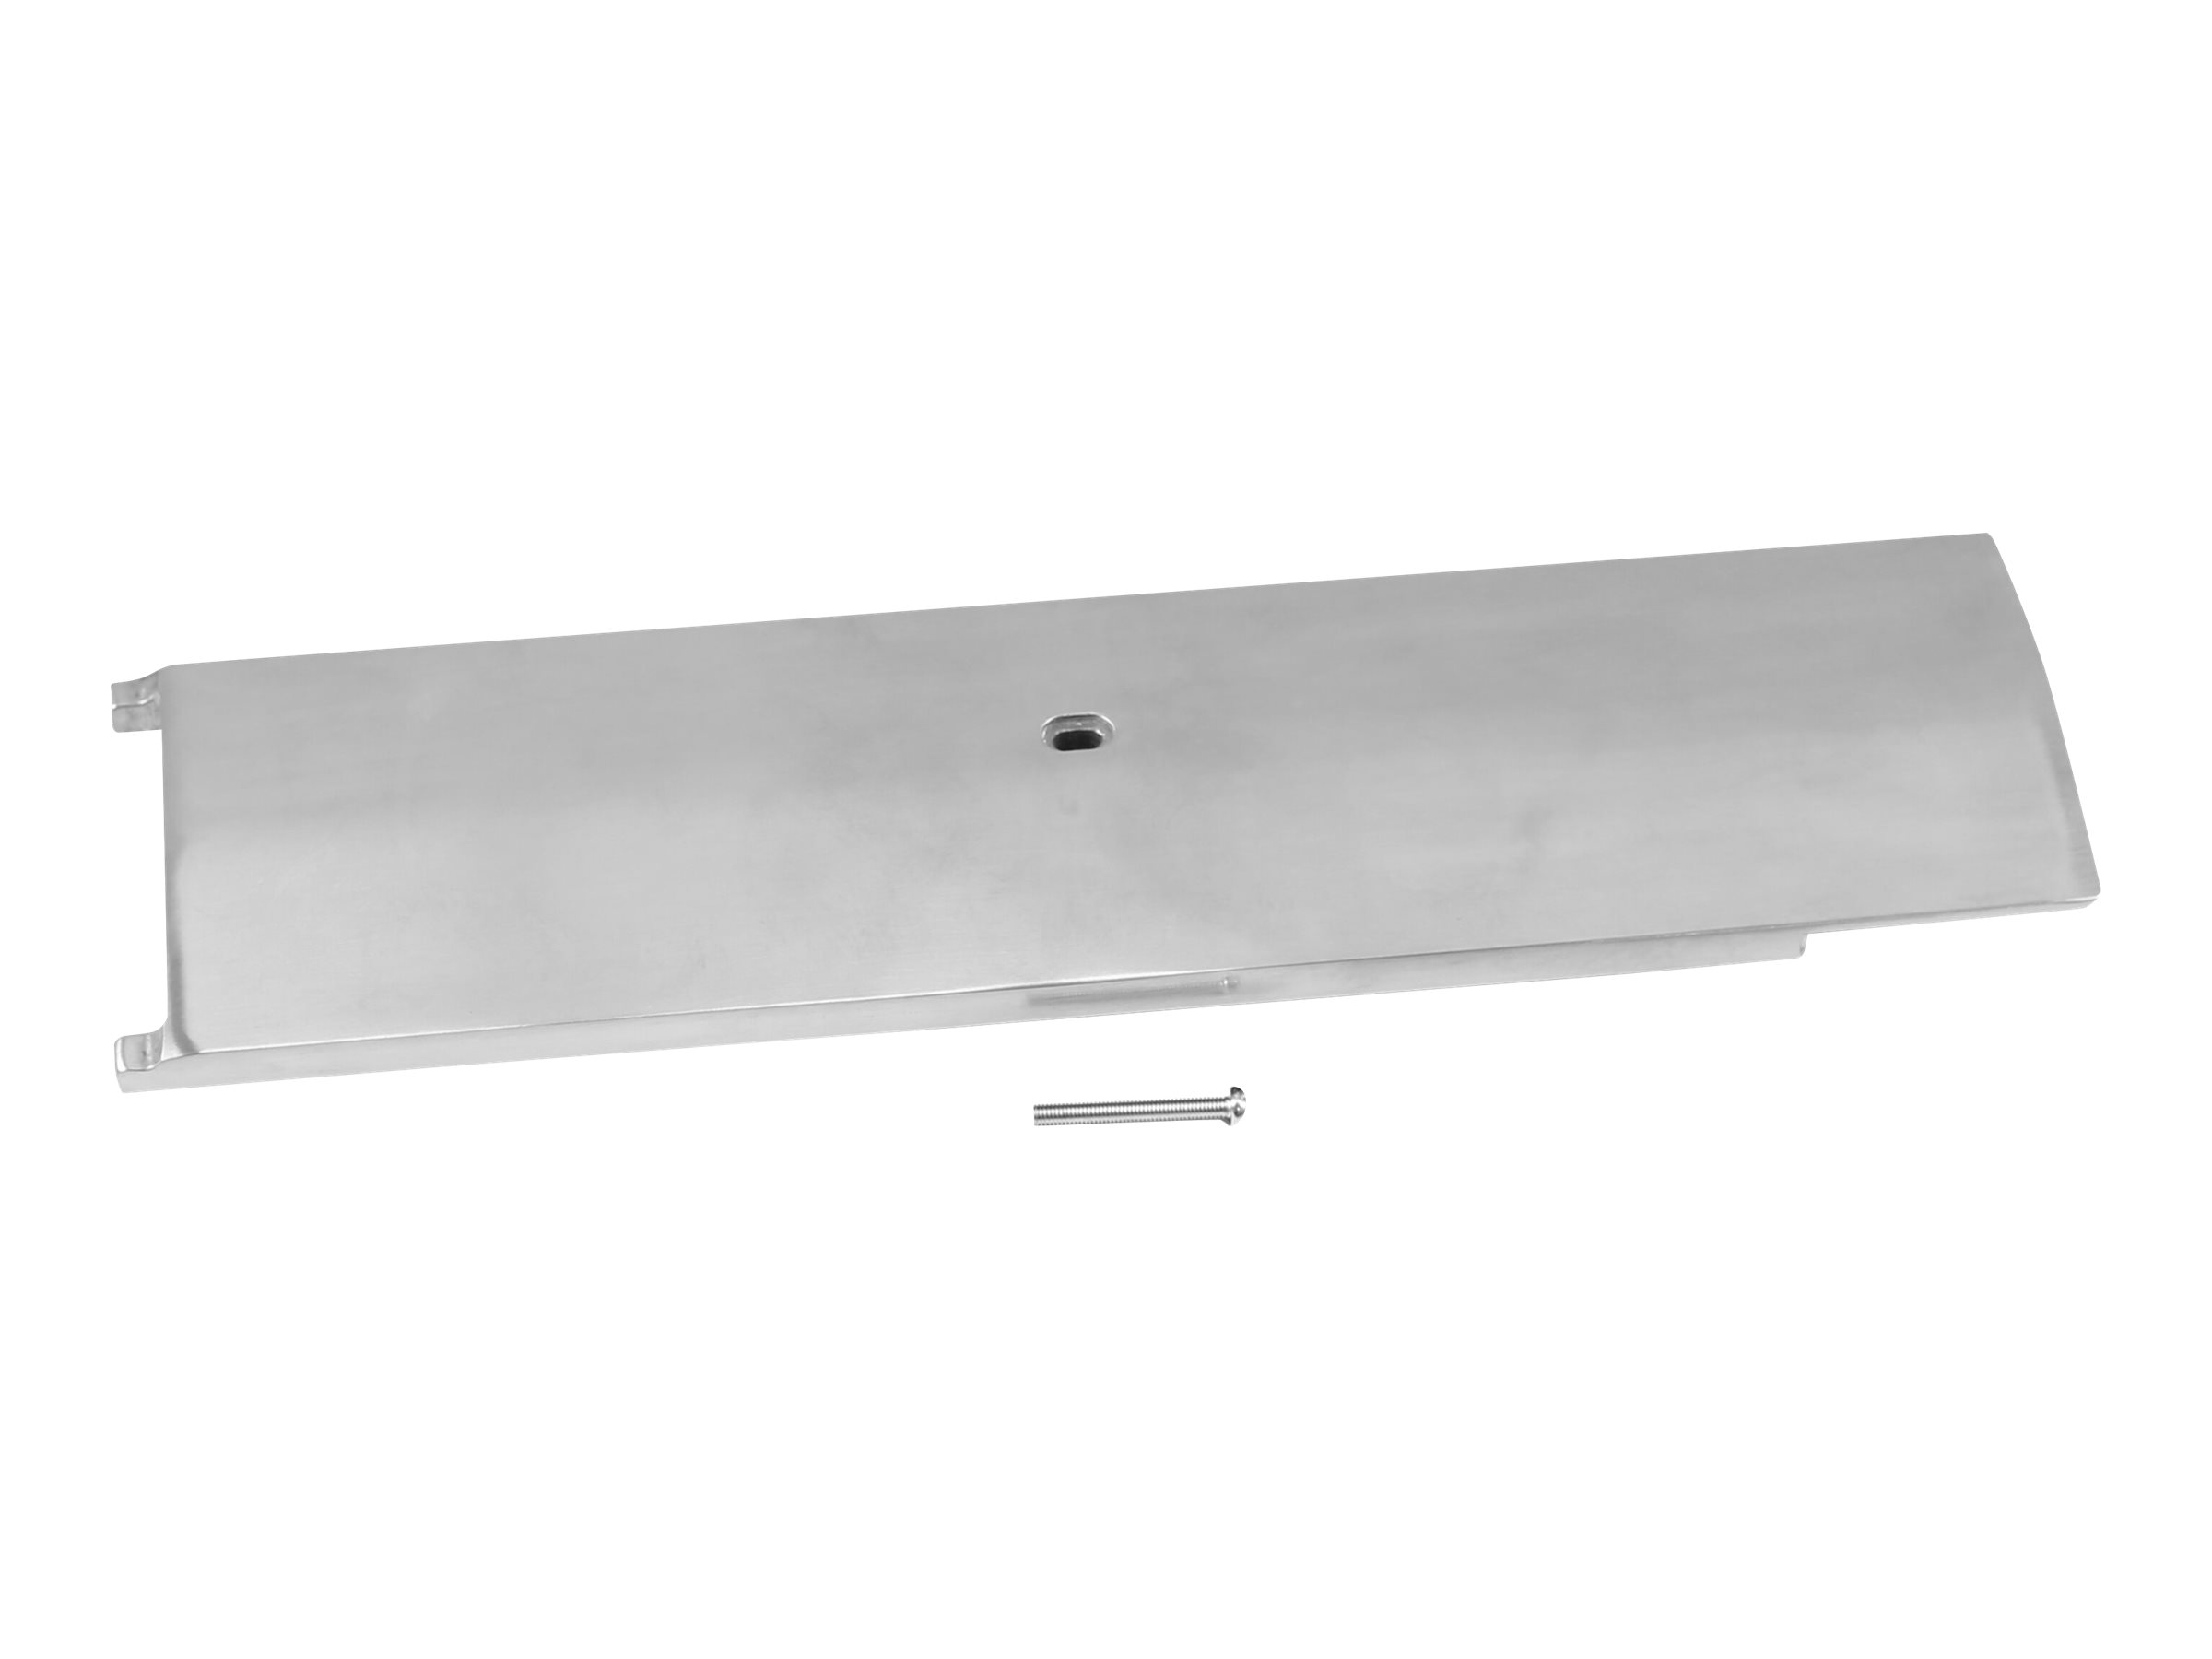 Ergotron Drawer Travel-Stop, 2-4 rows - Montagekomponente (Anschlag) - Aluminium